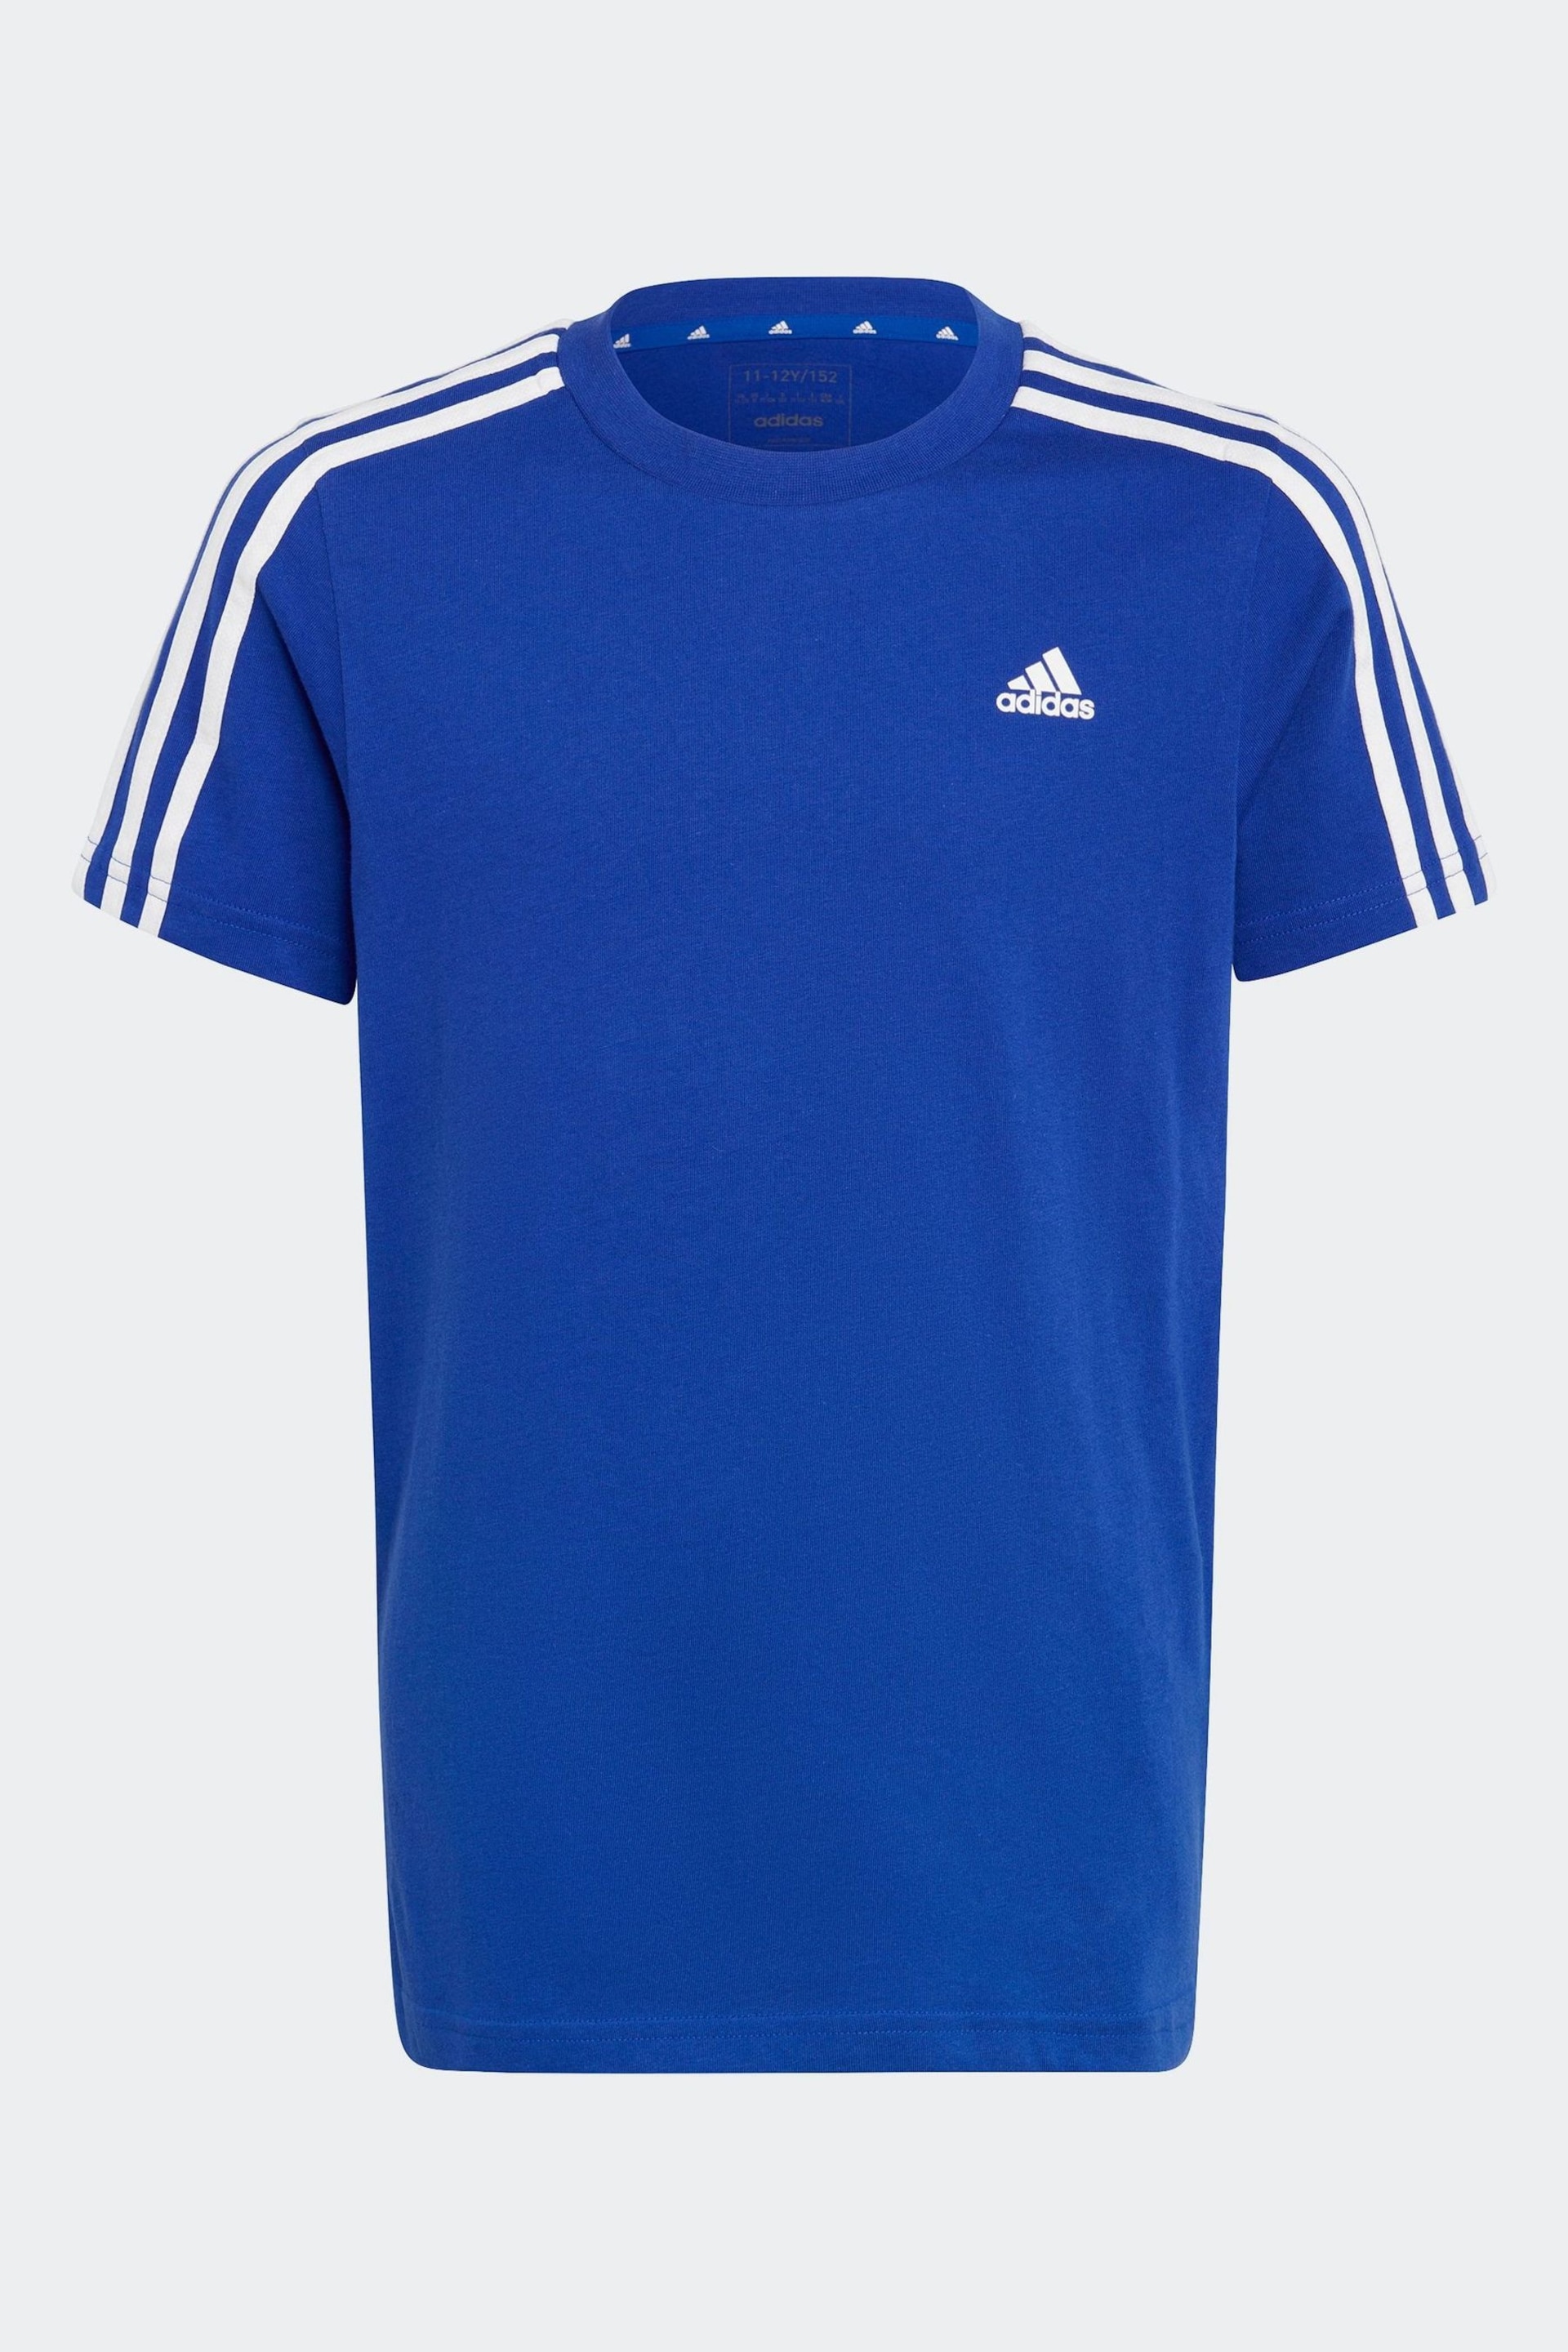 adidas Blue Essentials 3-Stripes Cotton T-Shirt - Image 1 of 5